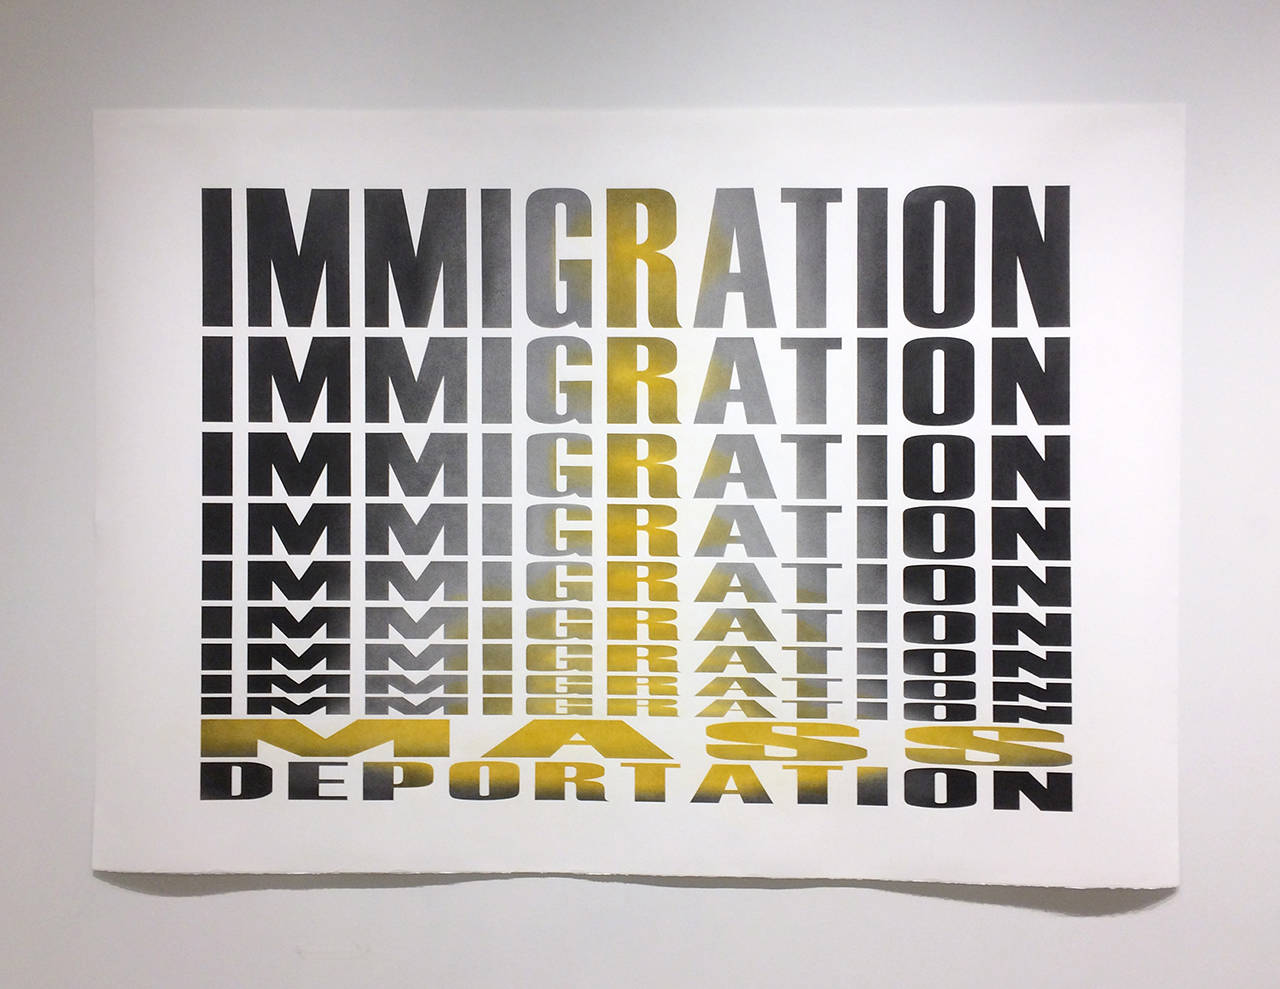 Immigration Mass Deportation